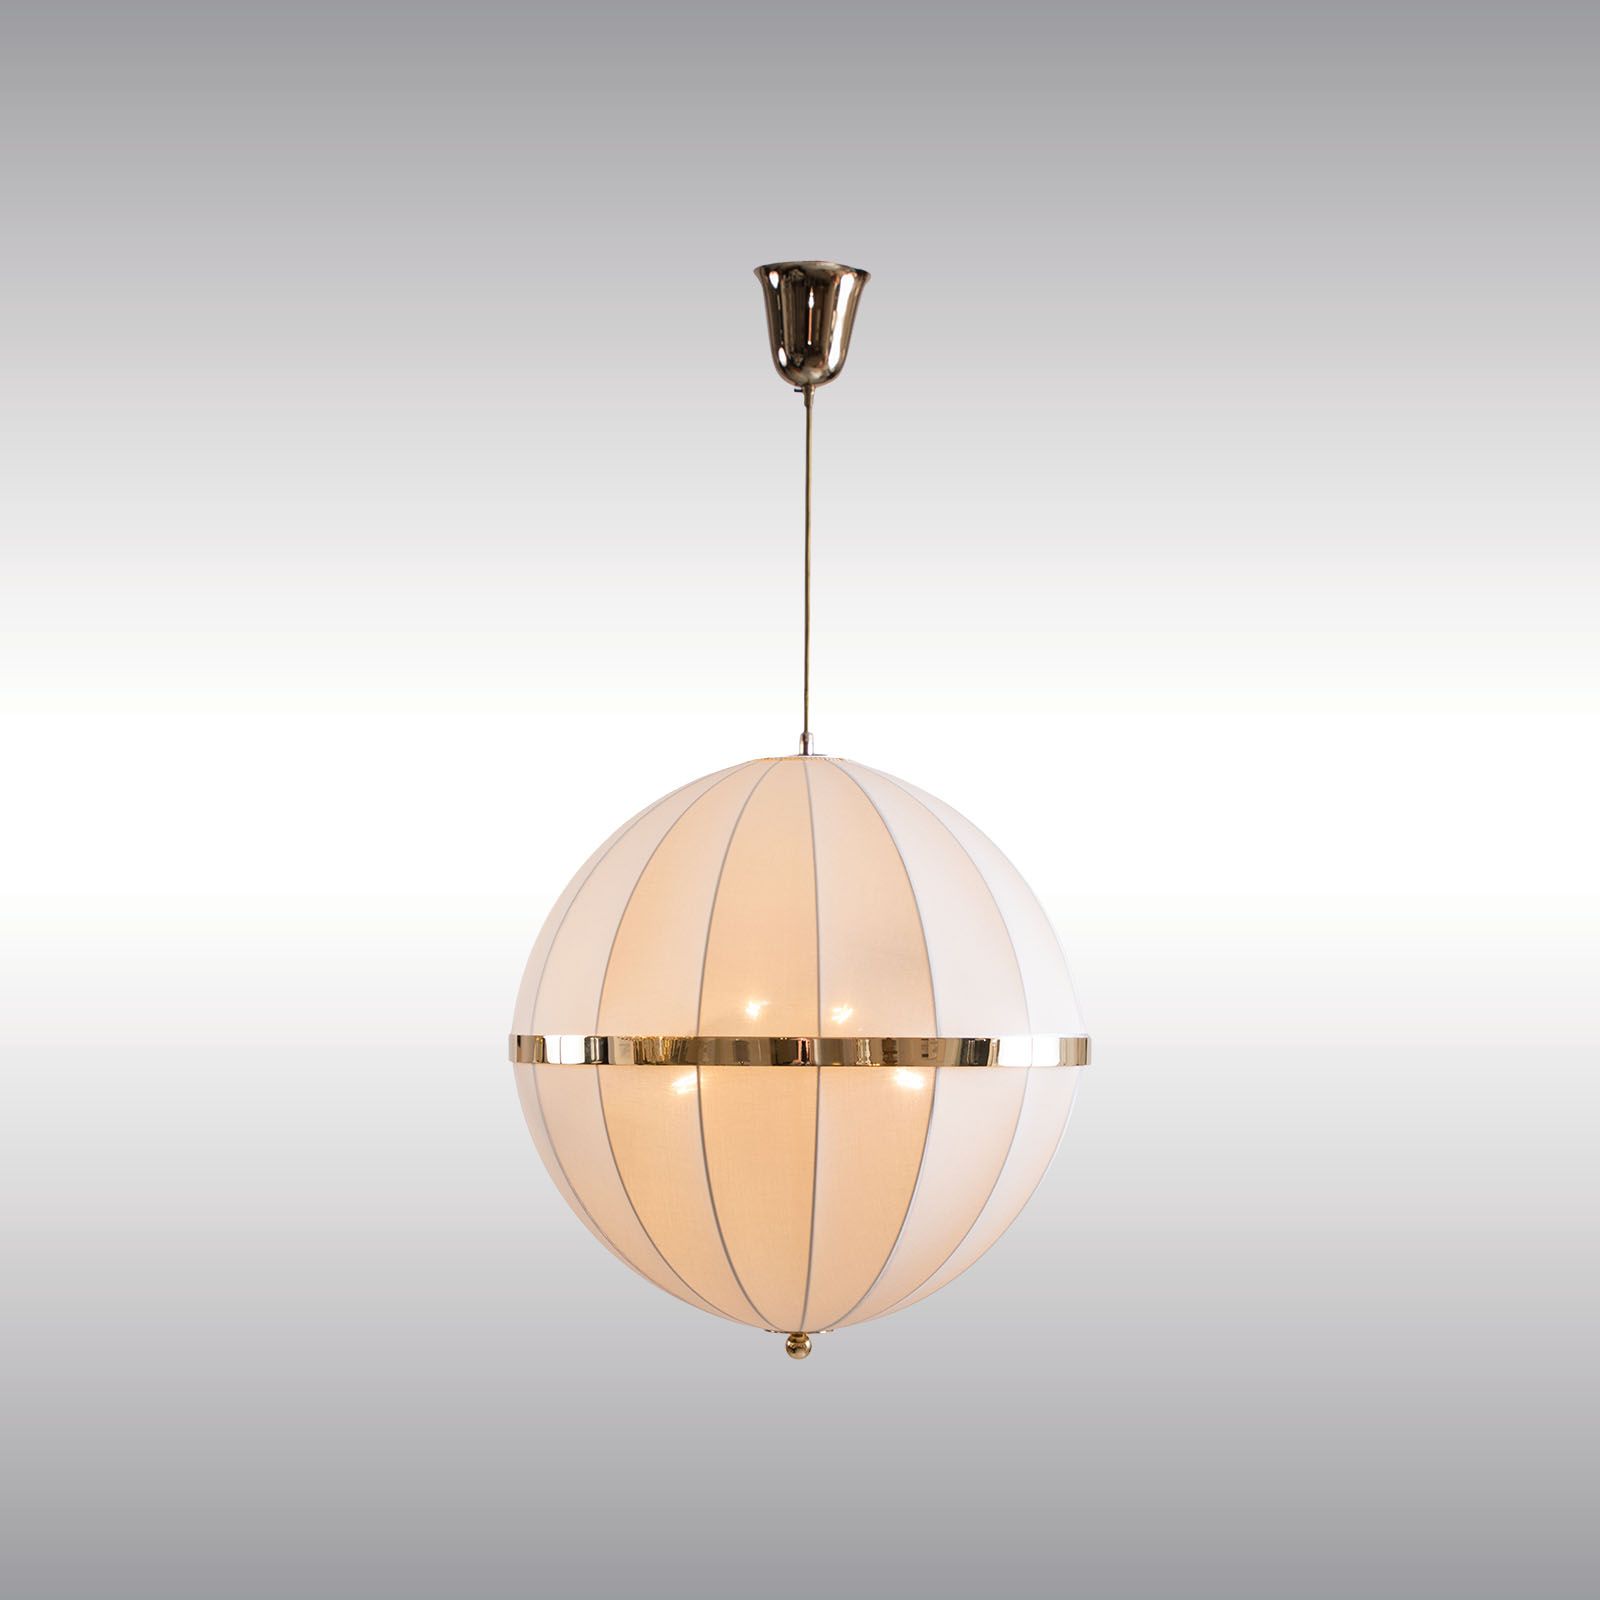 WOKA LAMPS VIENNA - OrderNr.: 22203|Luna 55 pure - Design: Josef Hoffmann